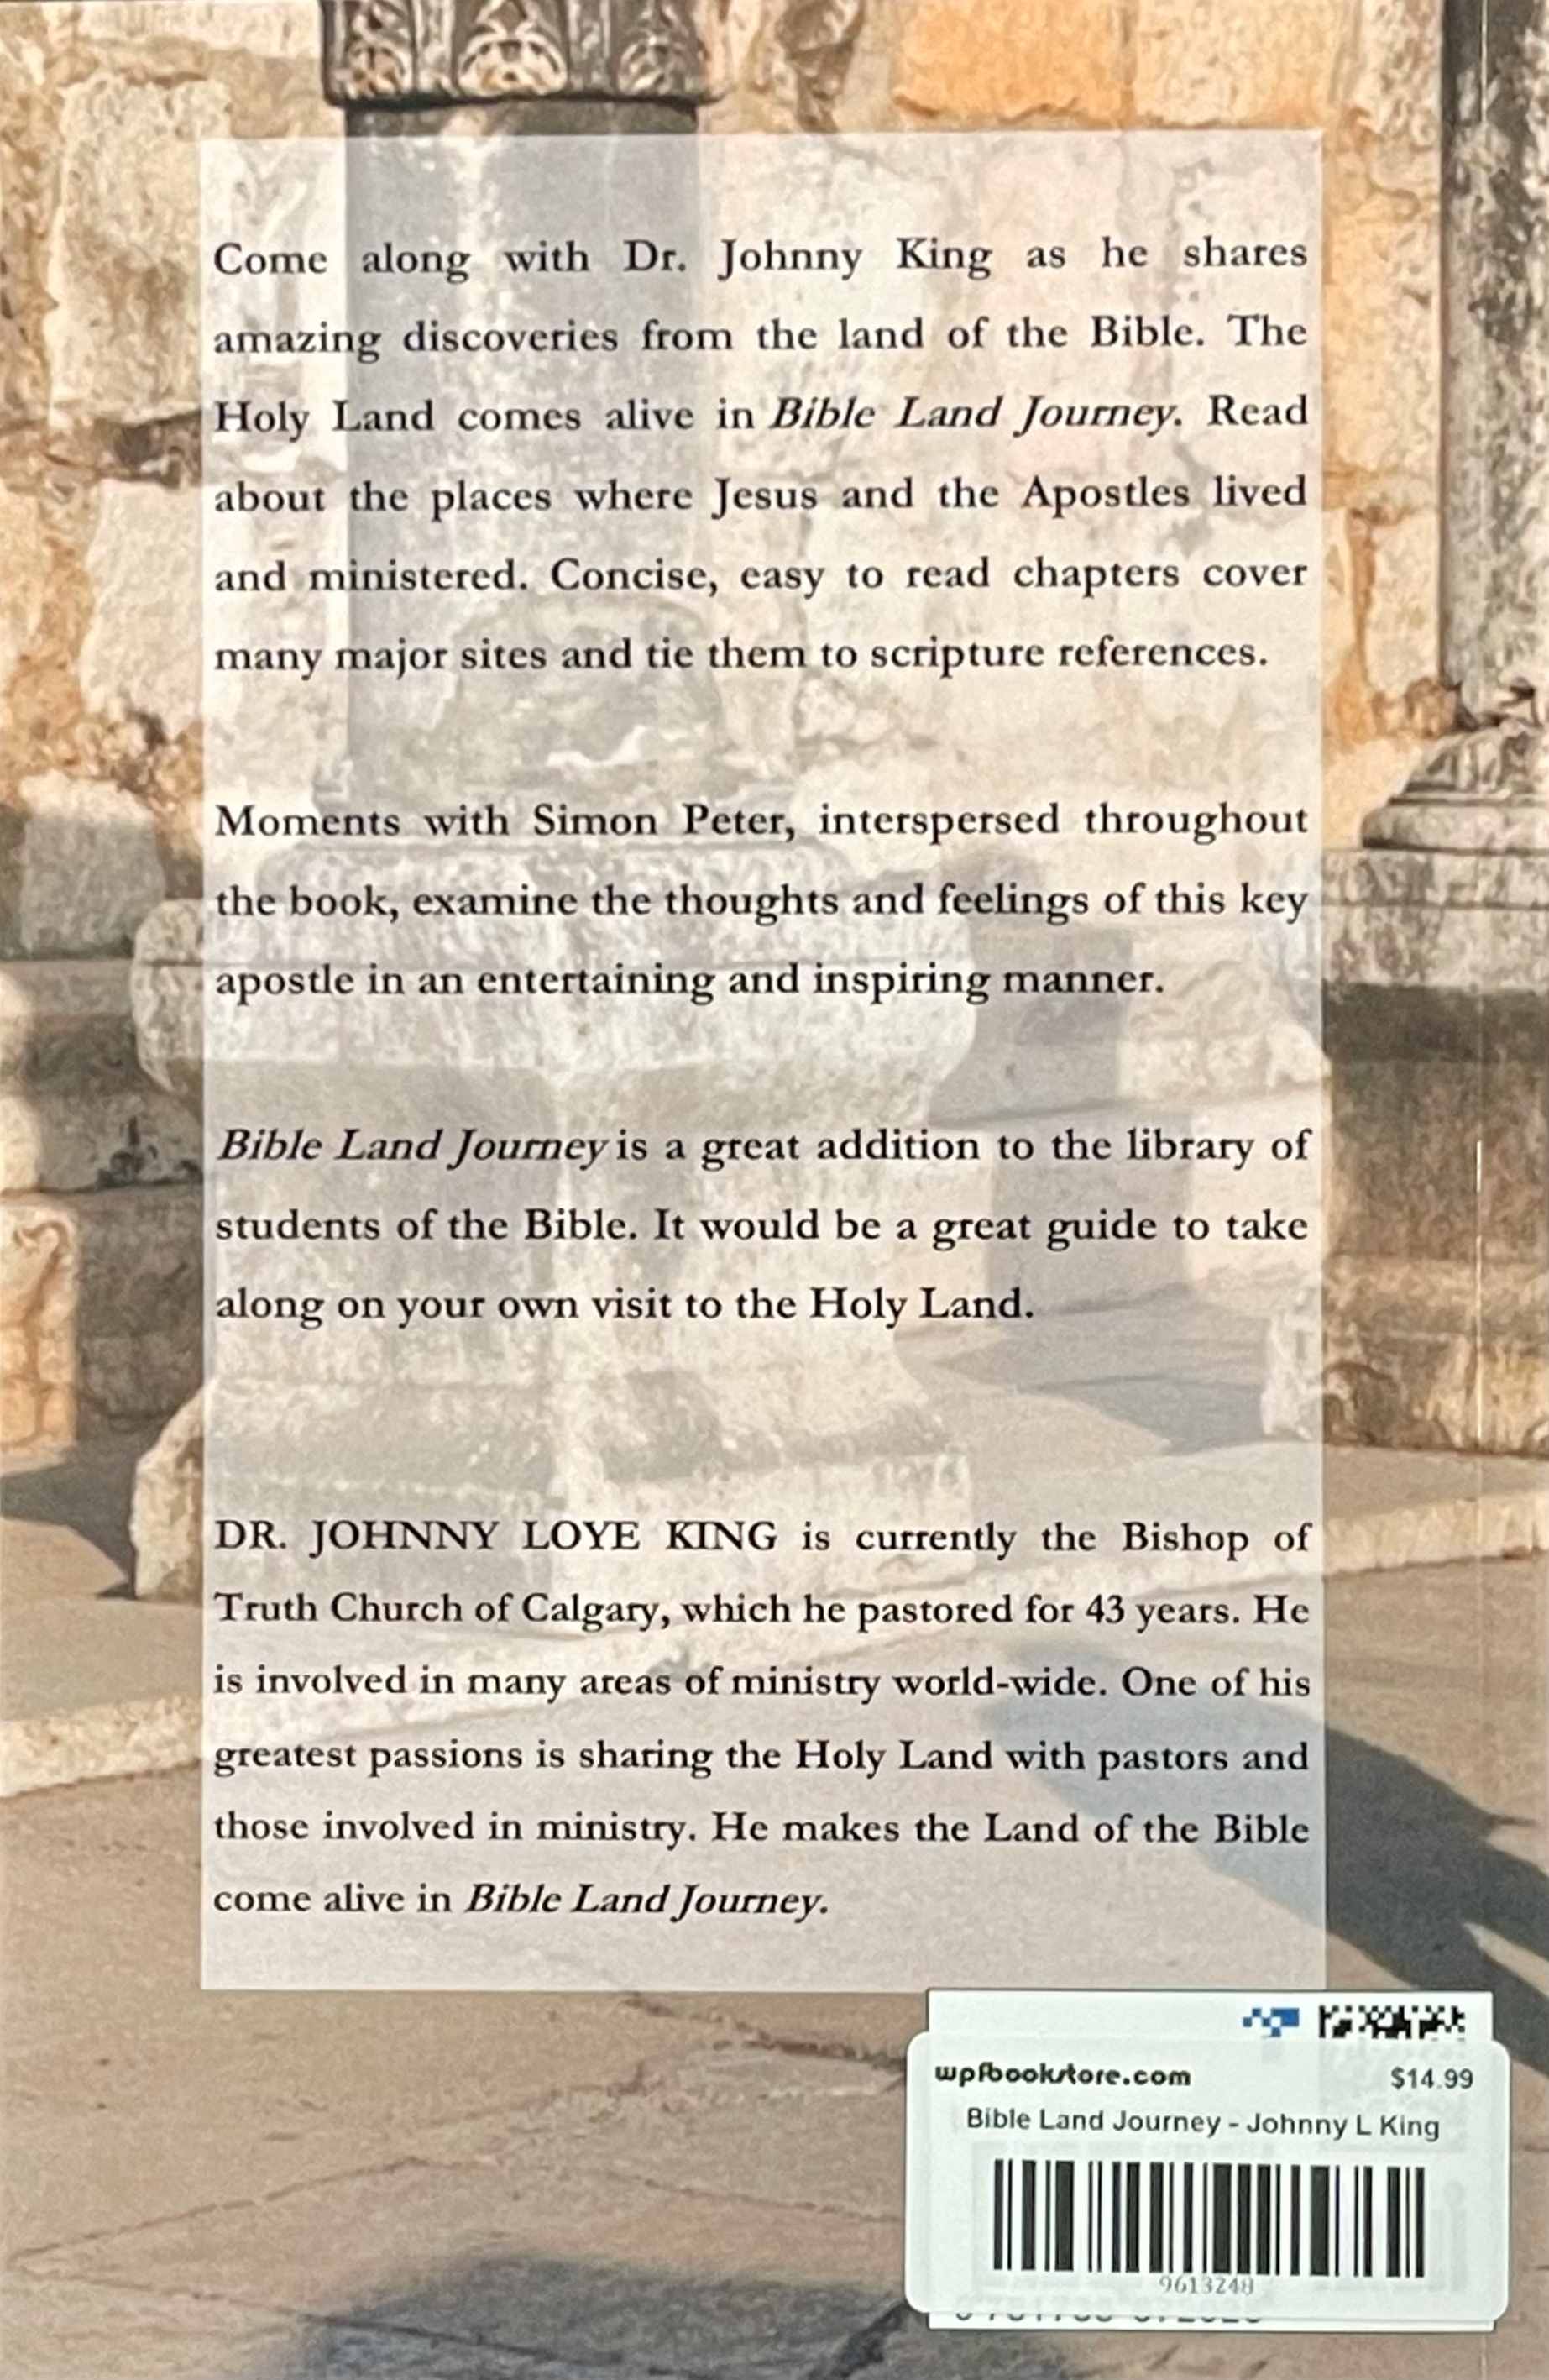 Bible Land Journey - Johnny L King, PhD